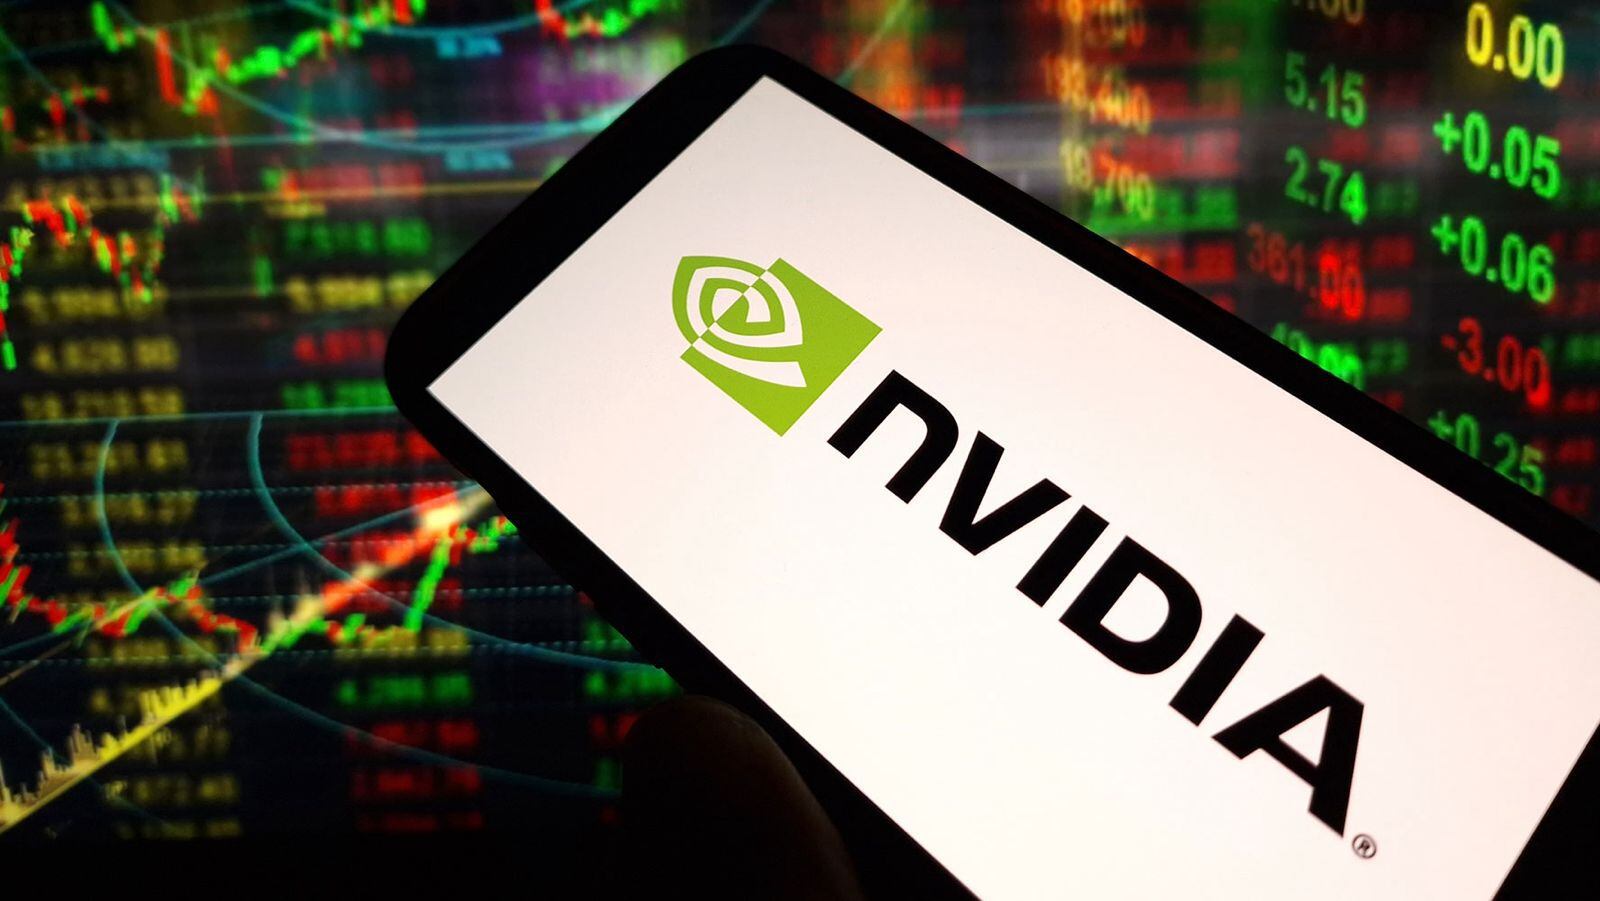 NVIDIA fue fundada en abril de 1993 por los ingenieros Jensen Huang, Chris Malachowsky y Curtis Priem. (Créditos: Piotr Swat/Shutterstock.com)